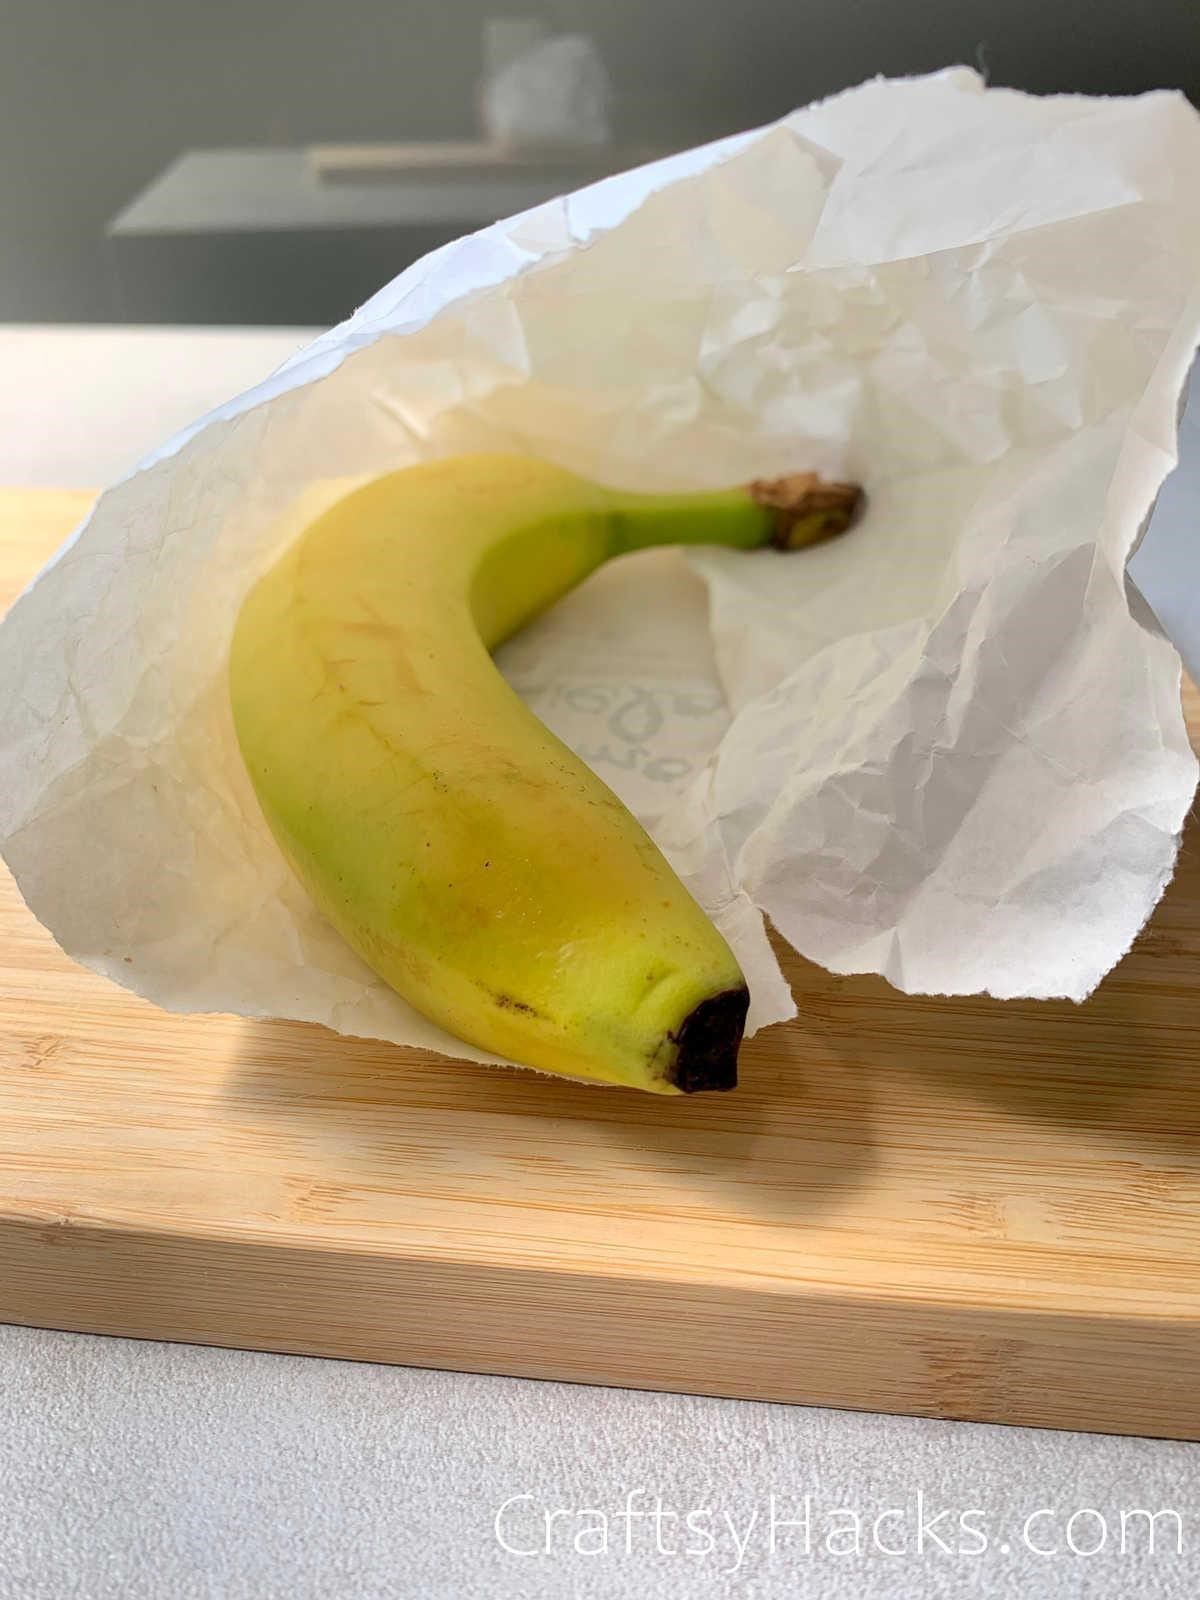 paper bag to speed up fruit ripening